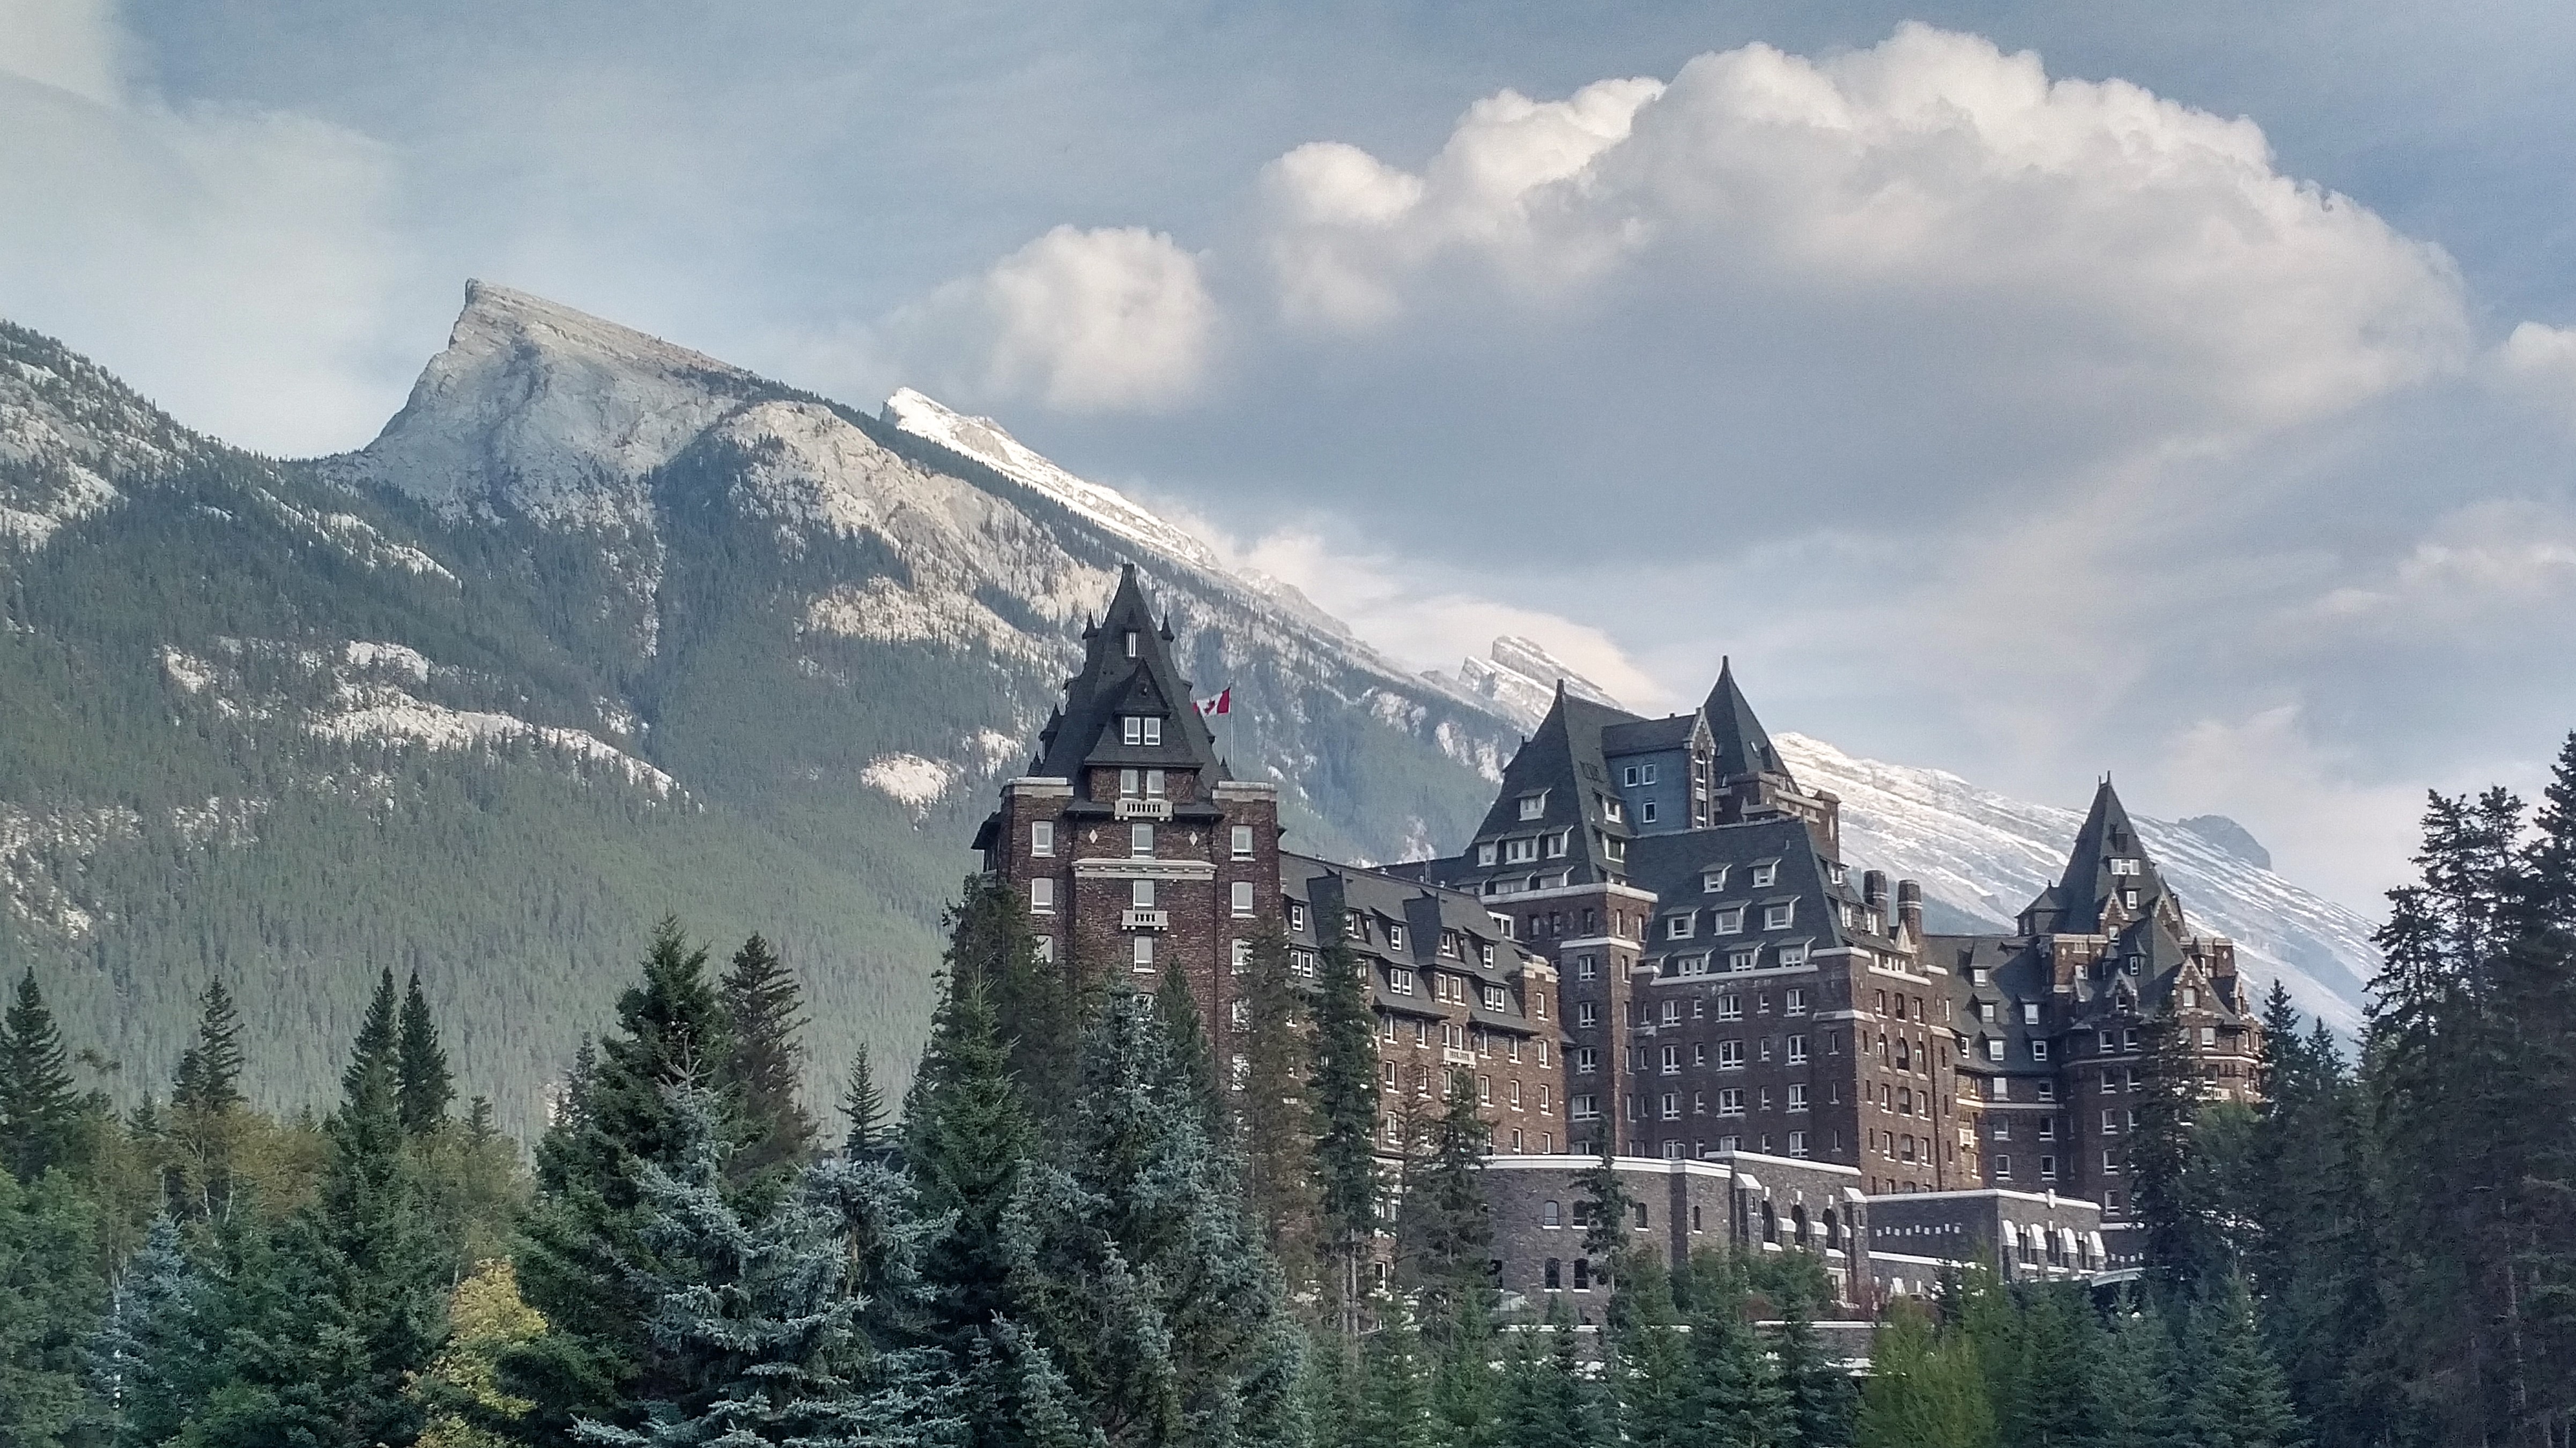 Banff Springs Hotel - Wikipedia